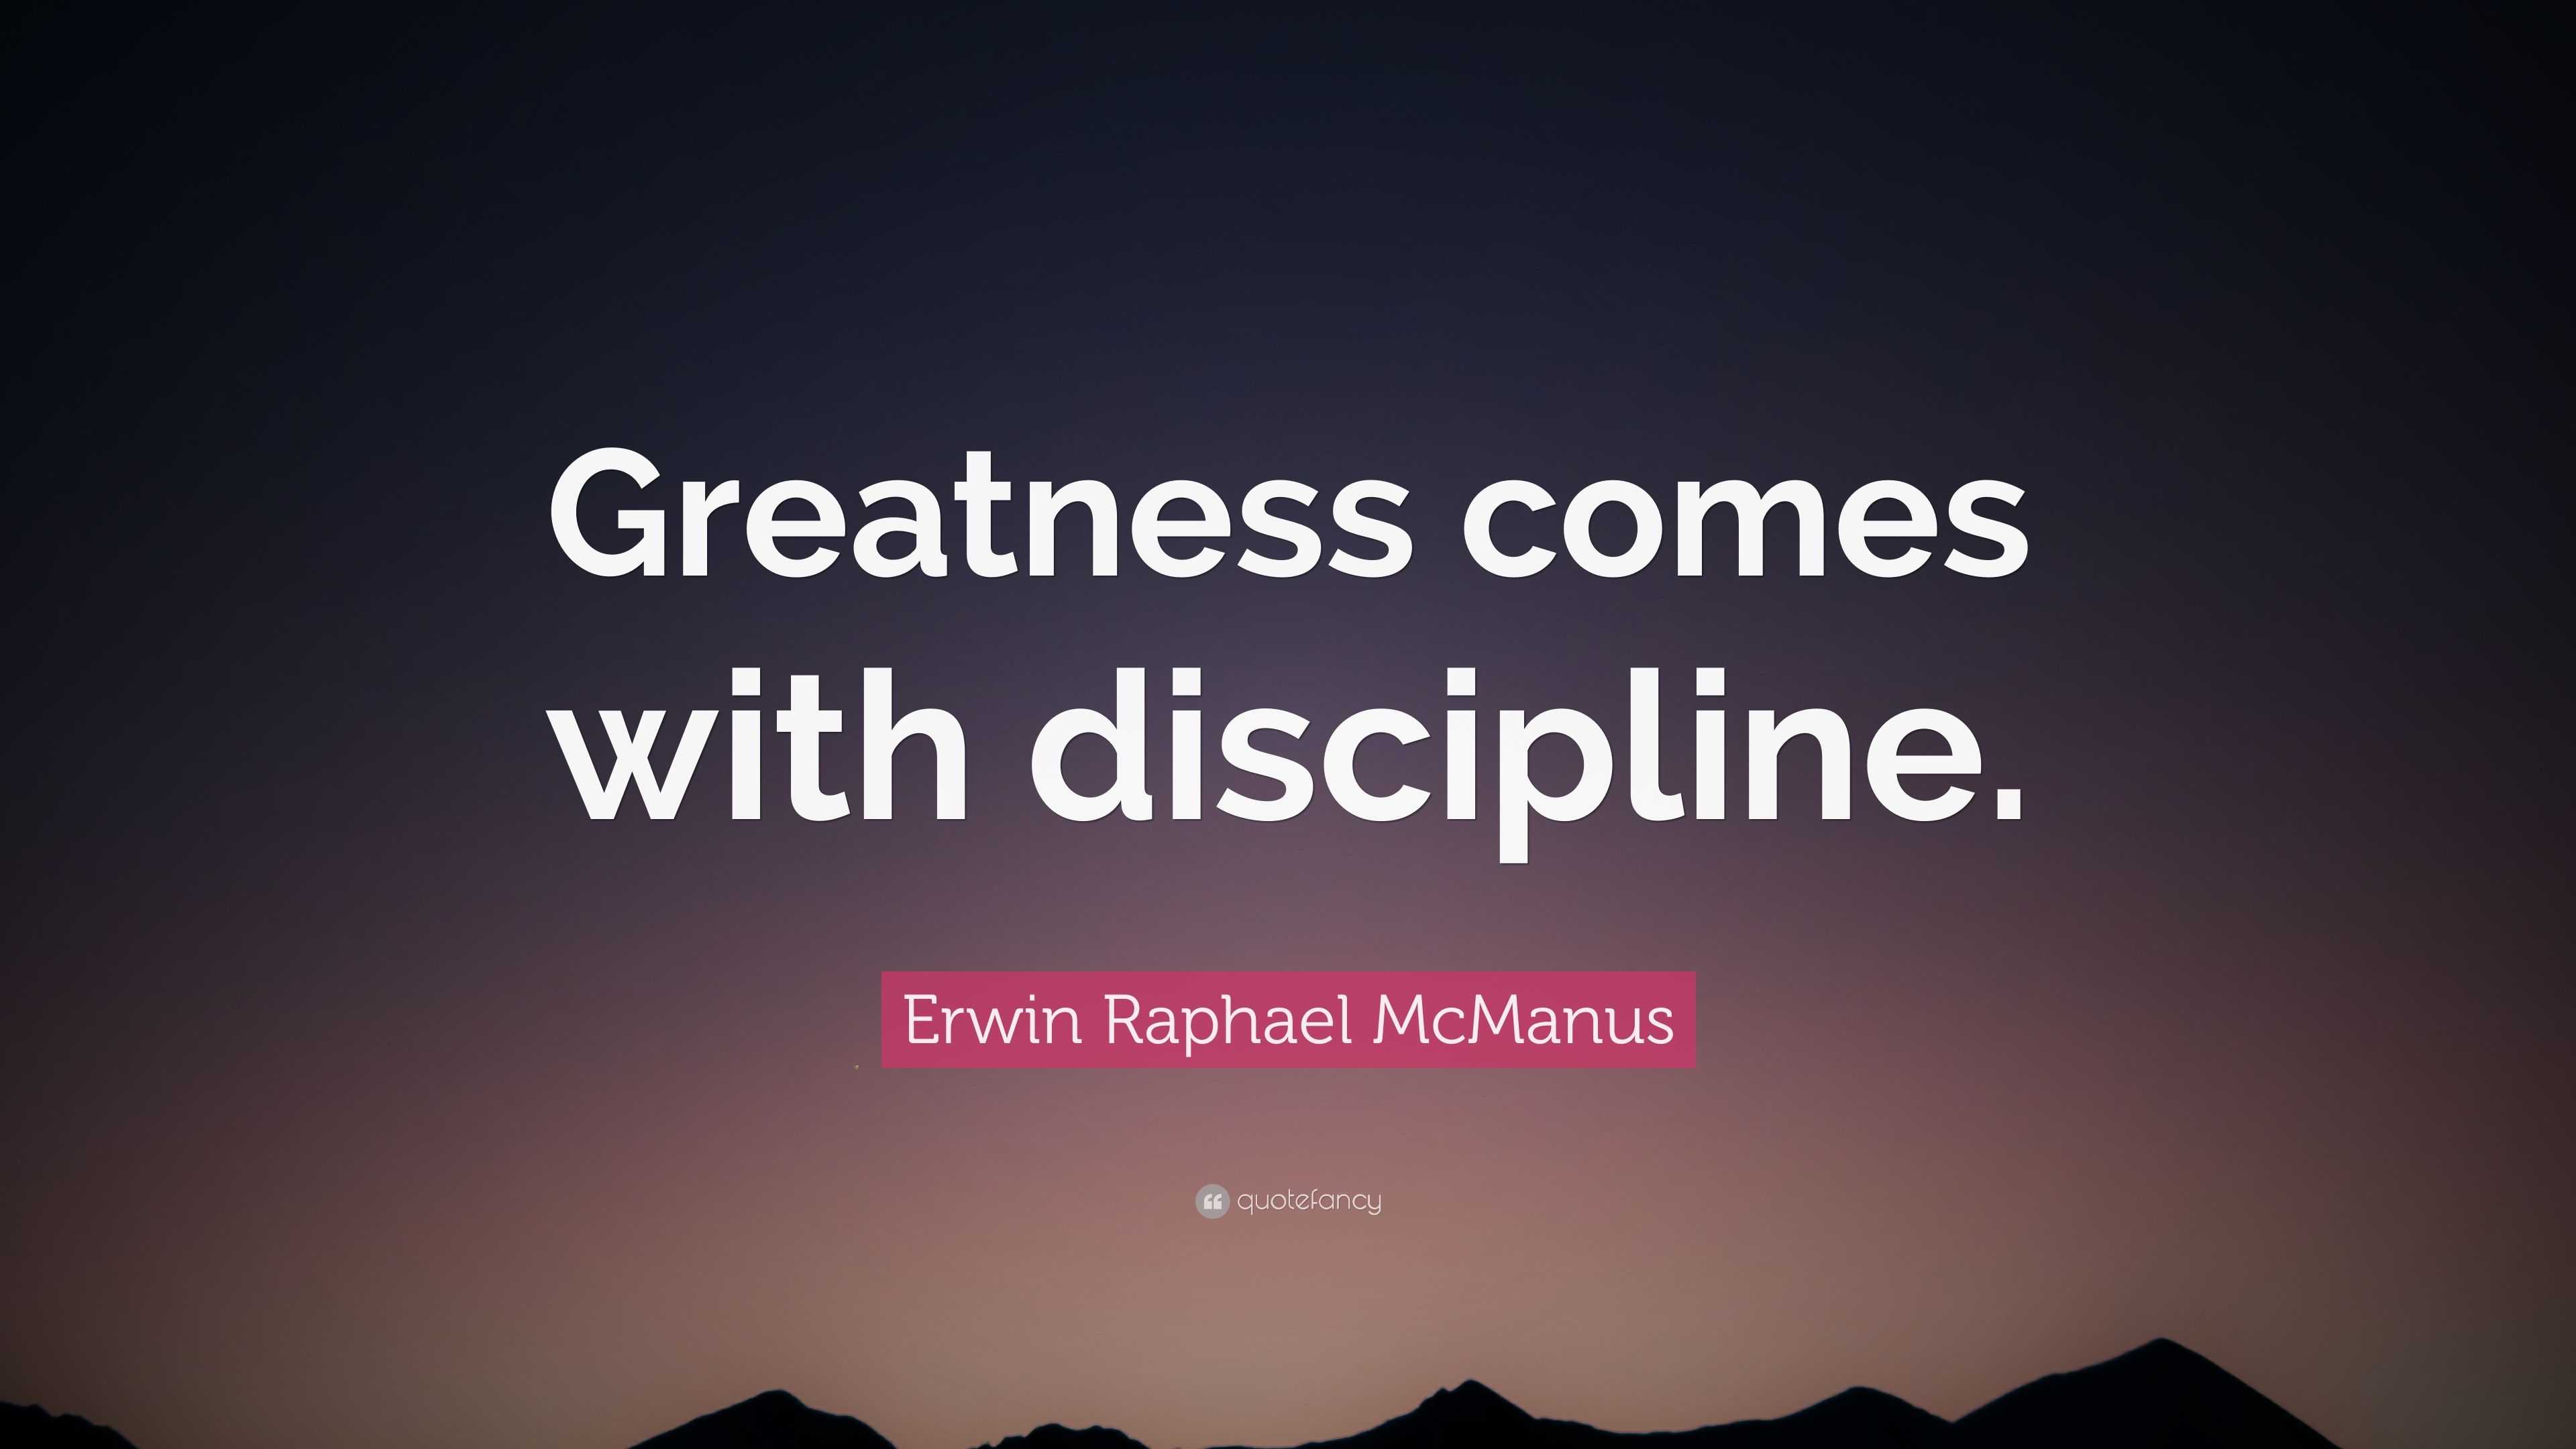 Erwin Raphael McManus Quote: “Greatness comes with discipline.”